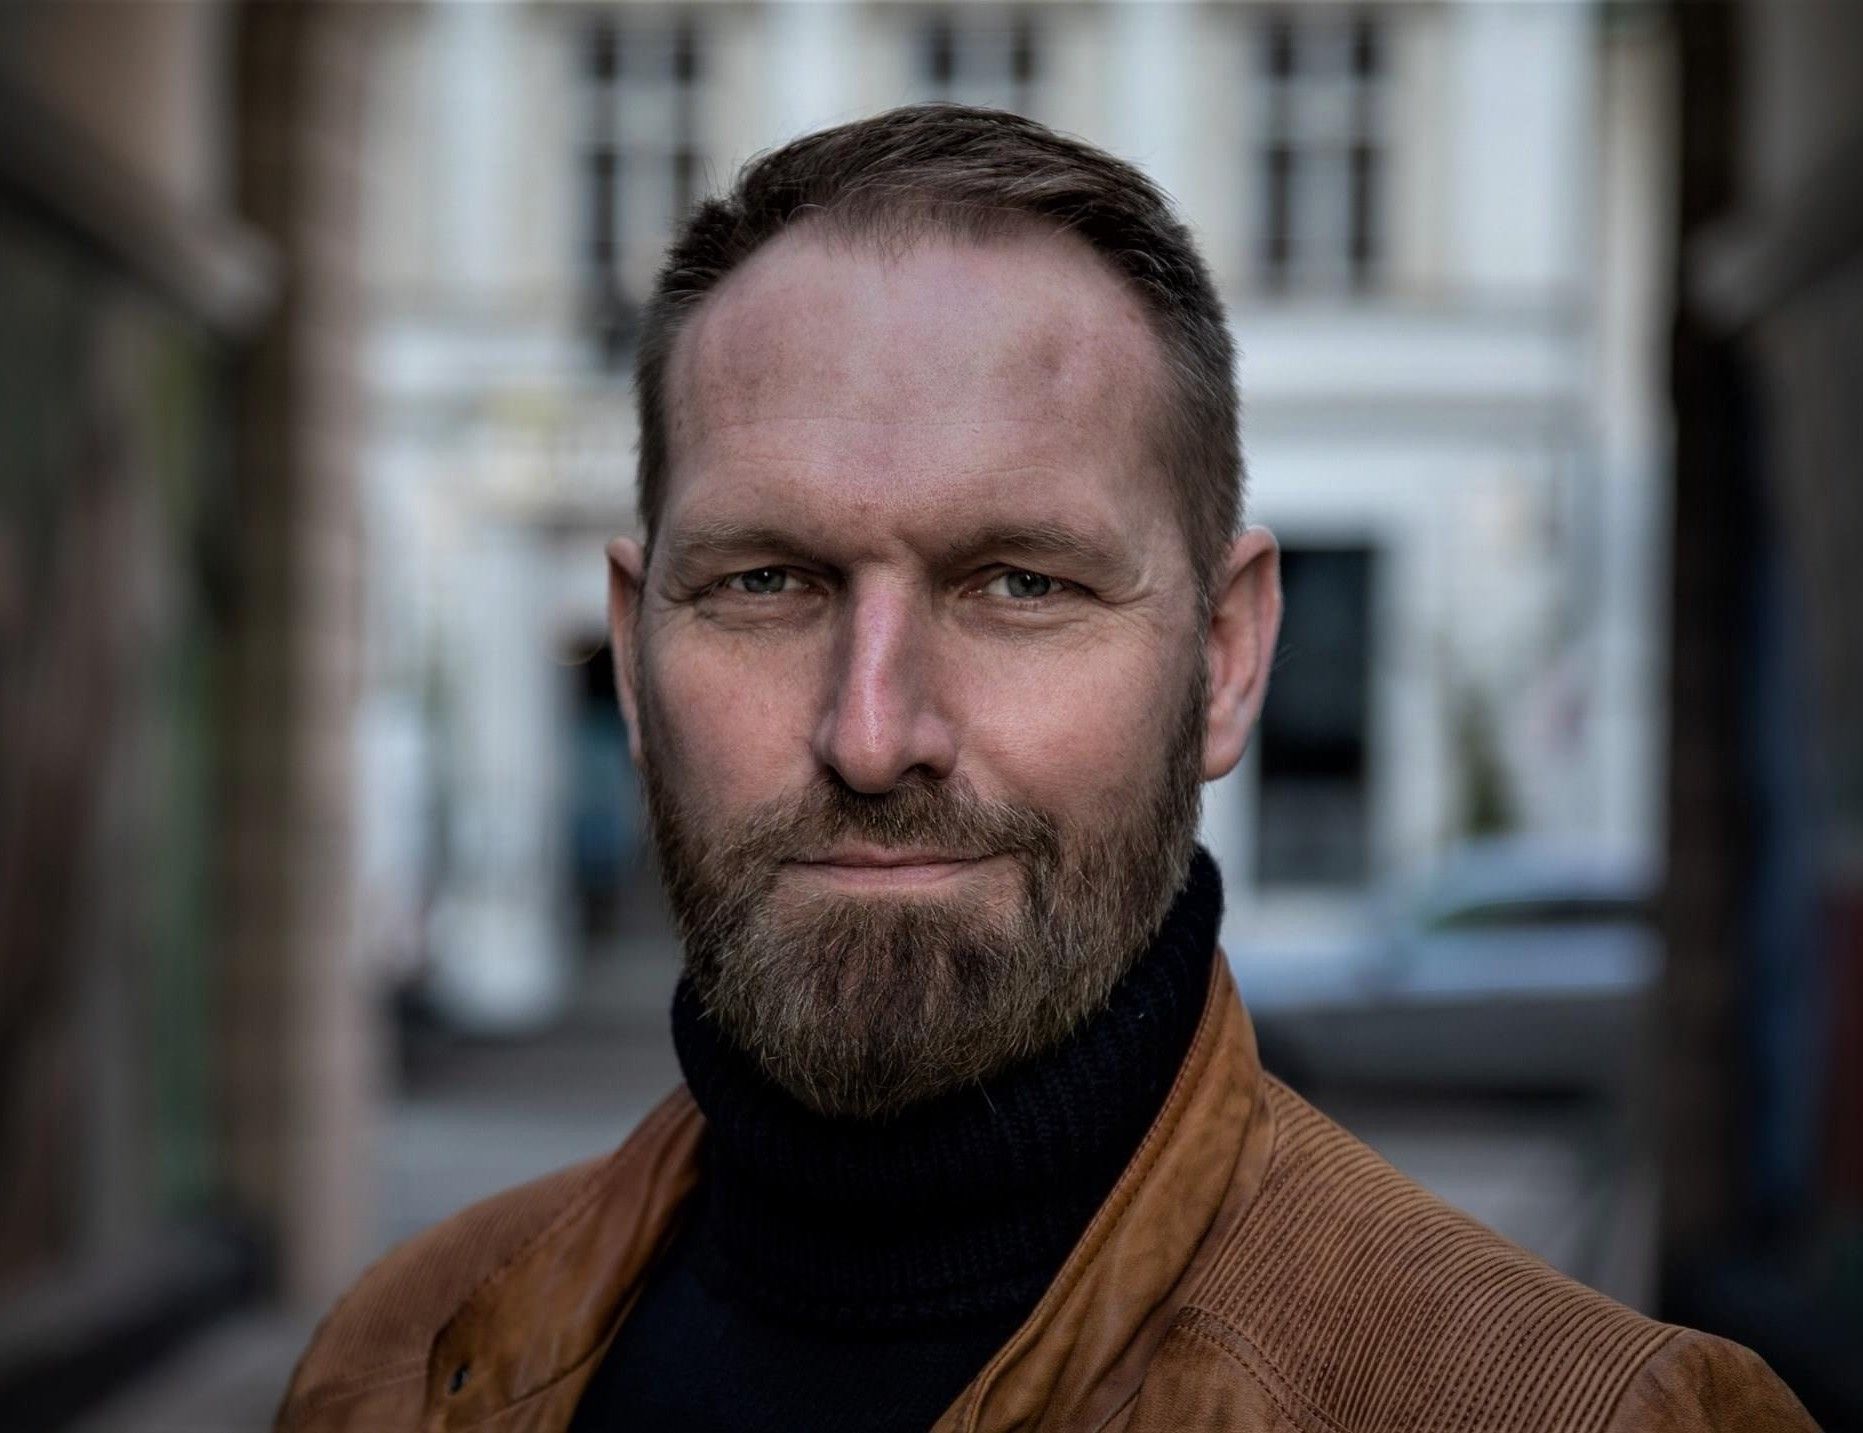 Kristian Danholm gik direkte fra en lederstilling på Radio24syv til rollen som kommunikationschef. Foto: Jonas Kim Jakobsen